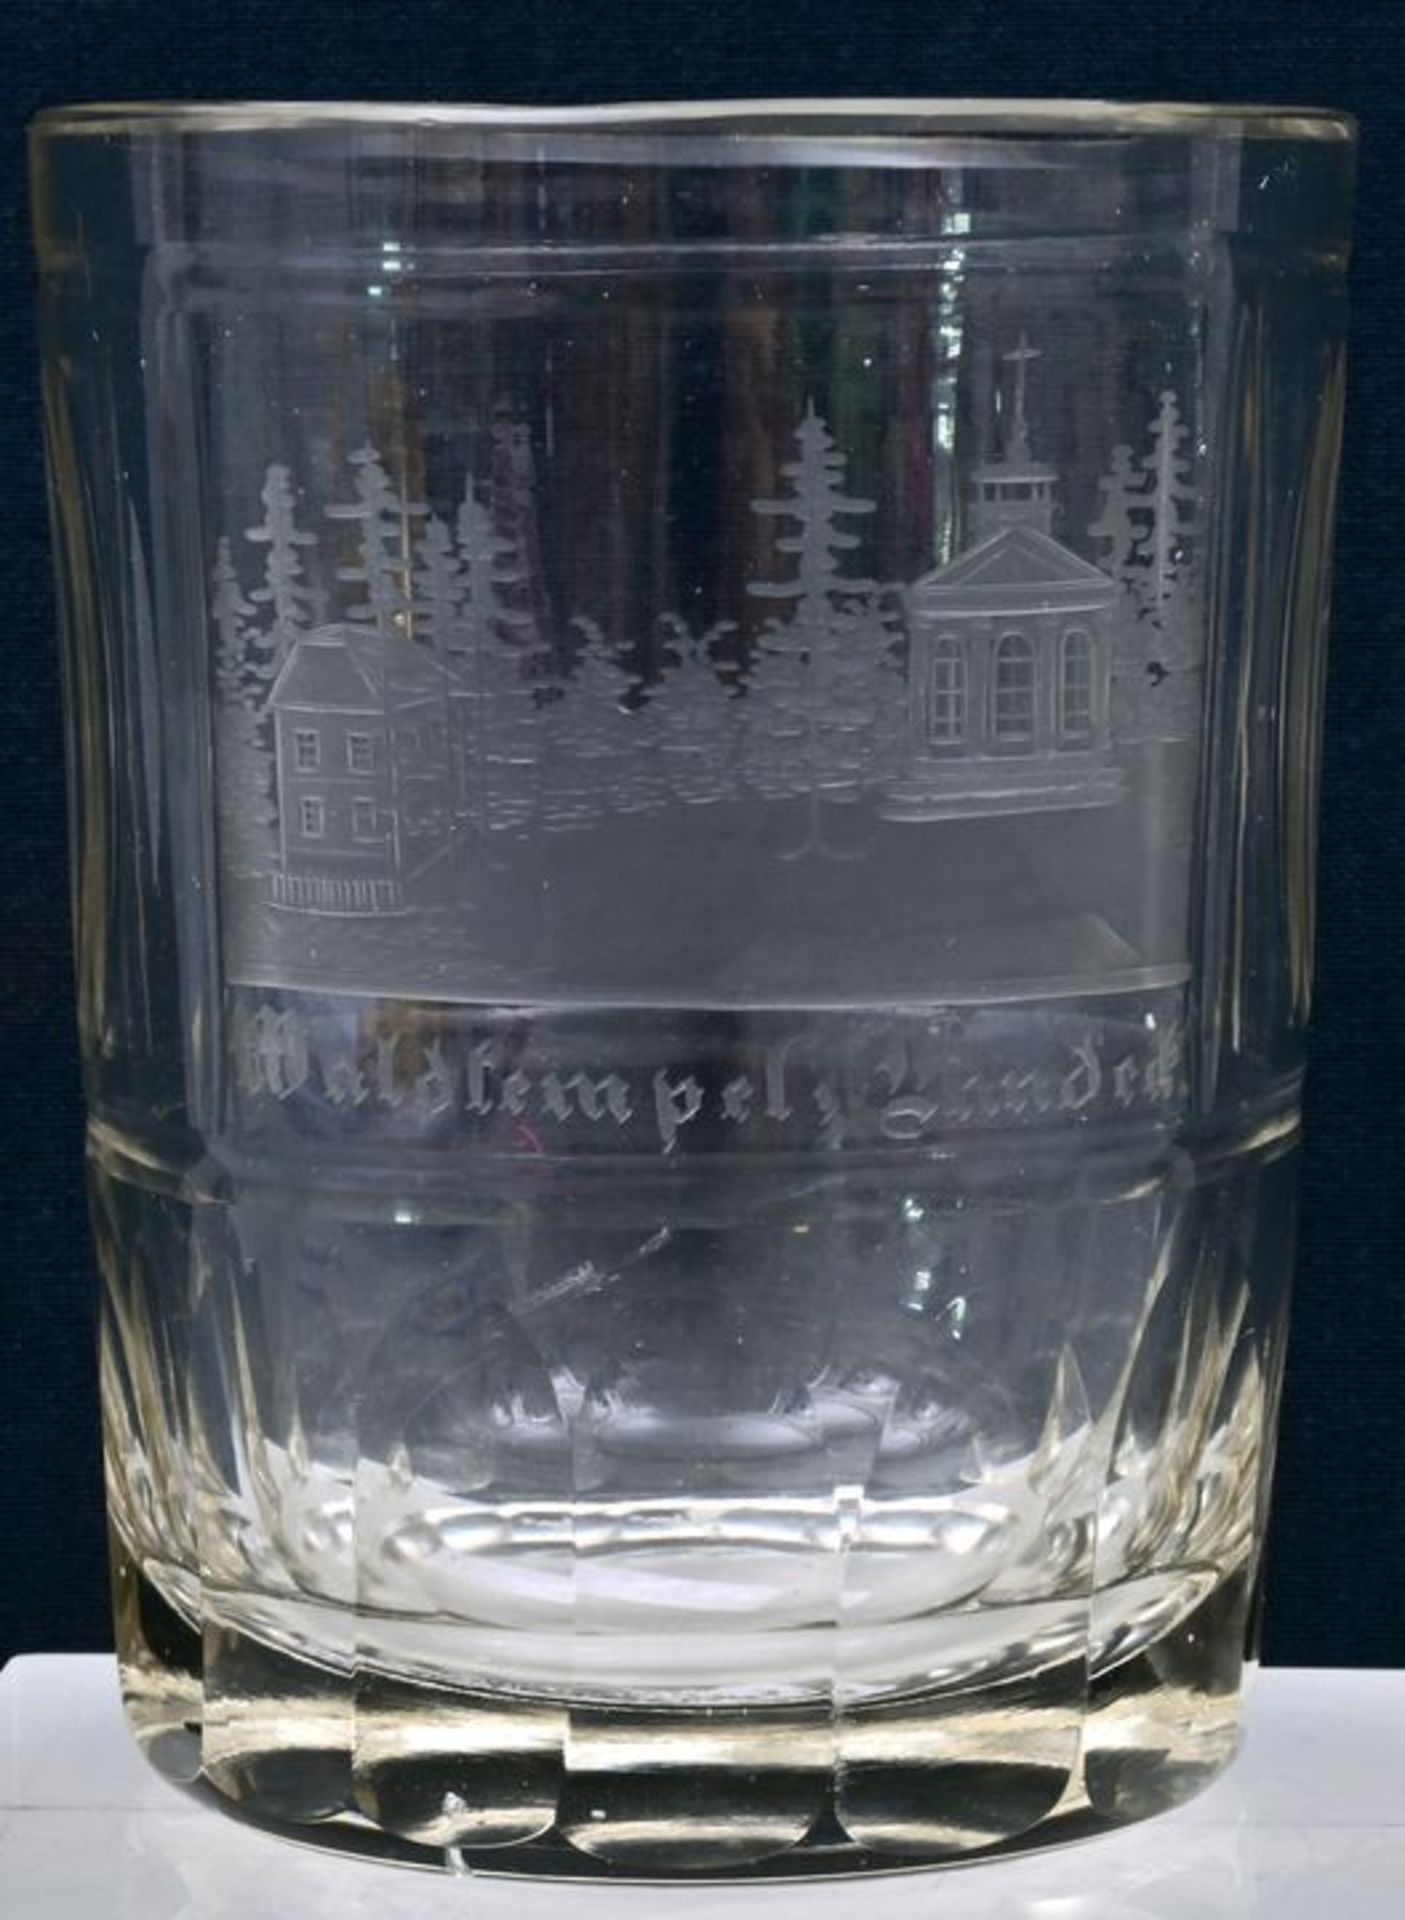 Becherglas / Glass beaker